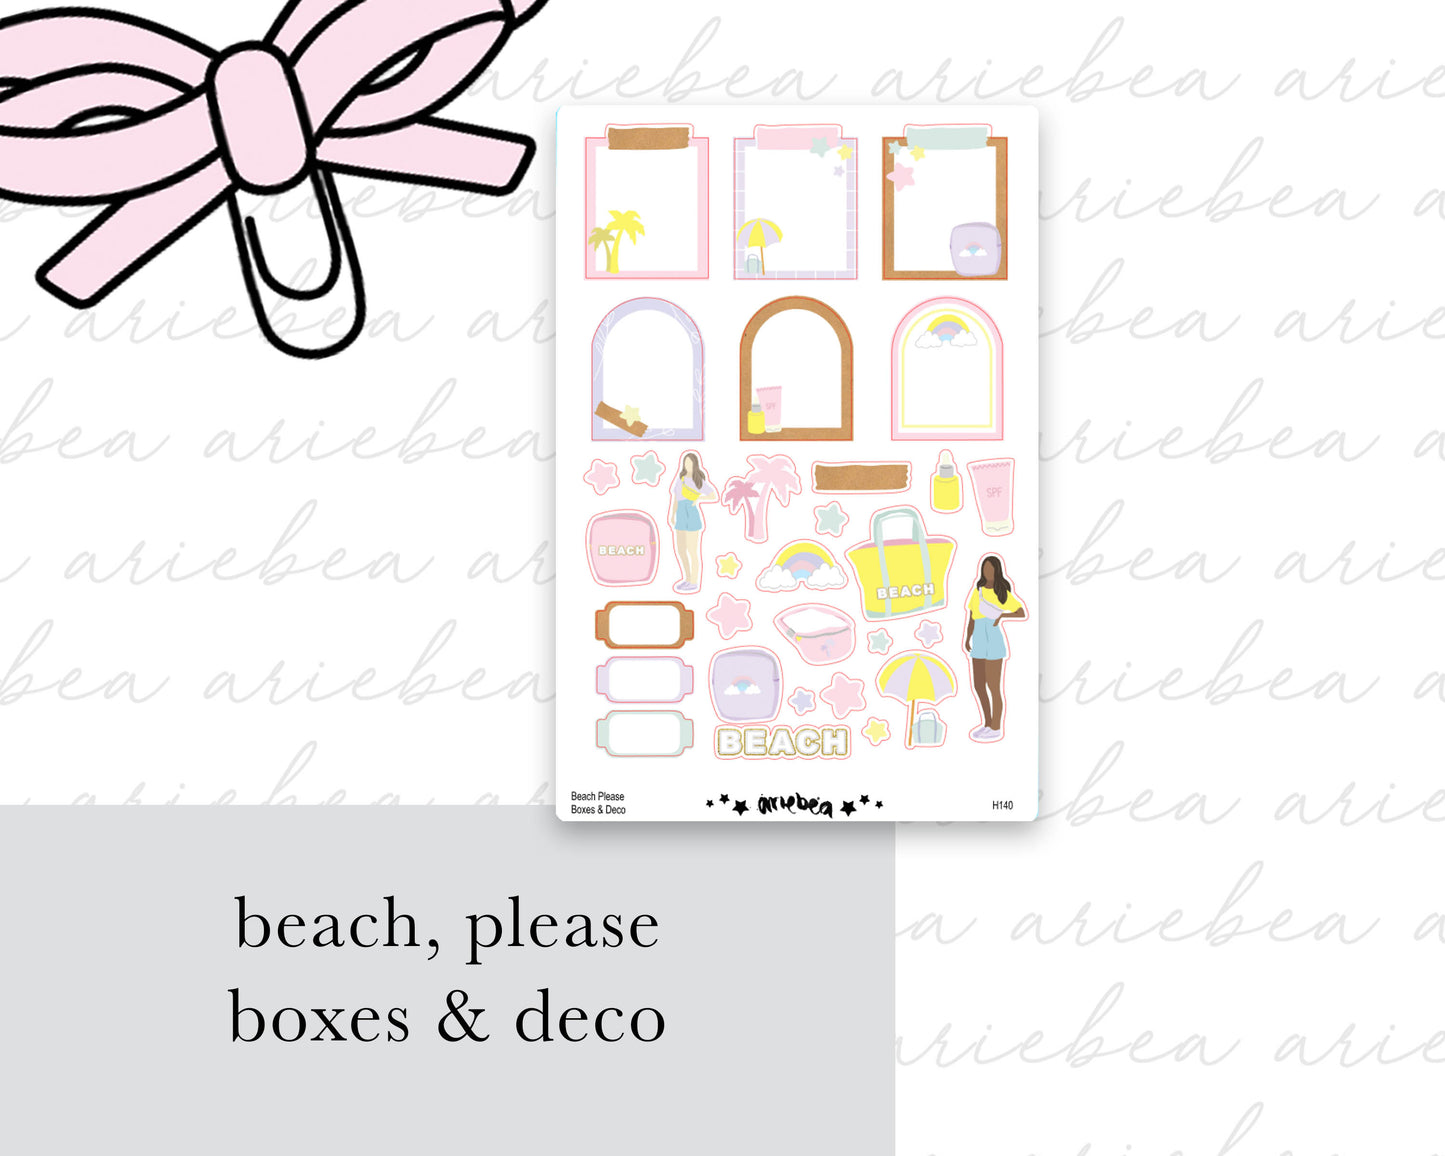 Beach Please Boxes & Deco